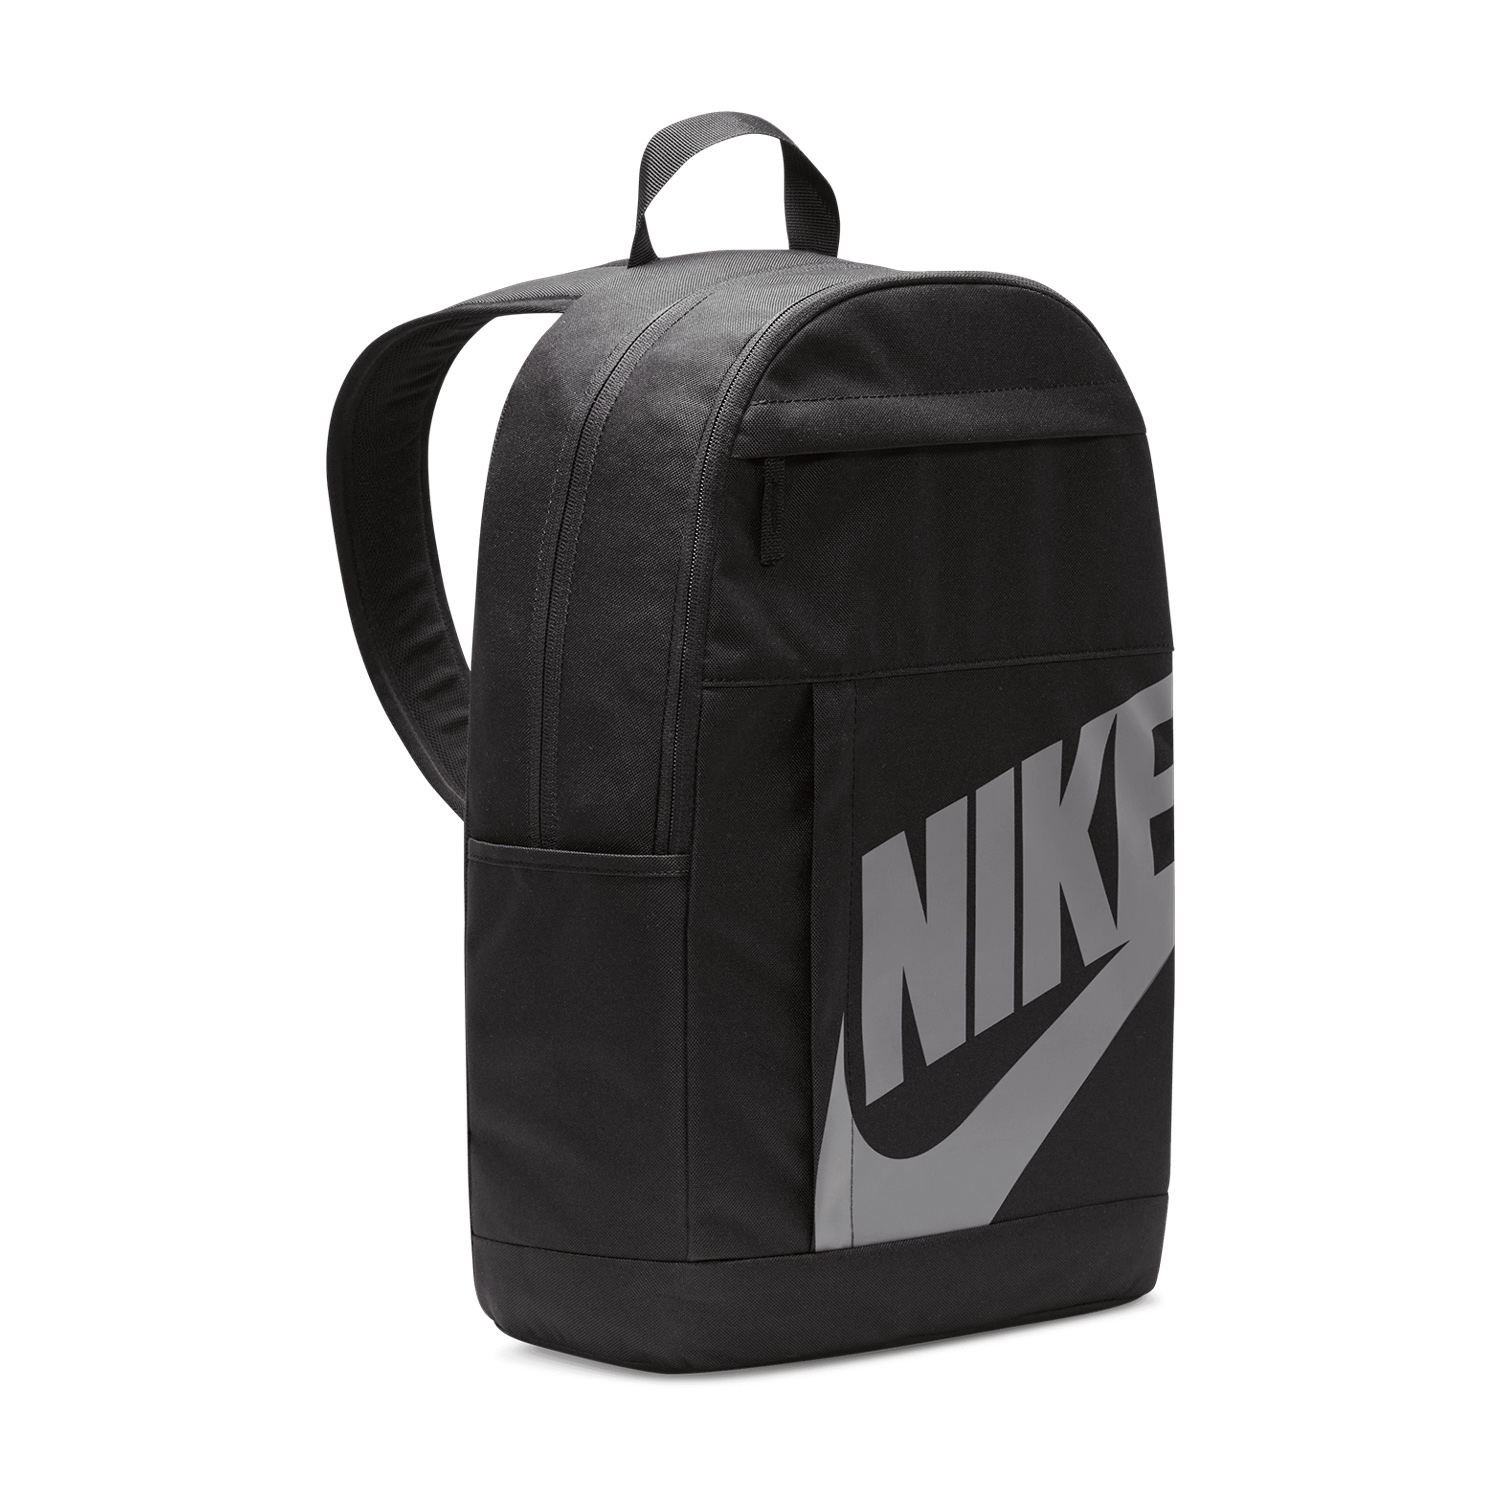 Nike Elemental Backpack - Black/Anthracite